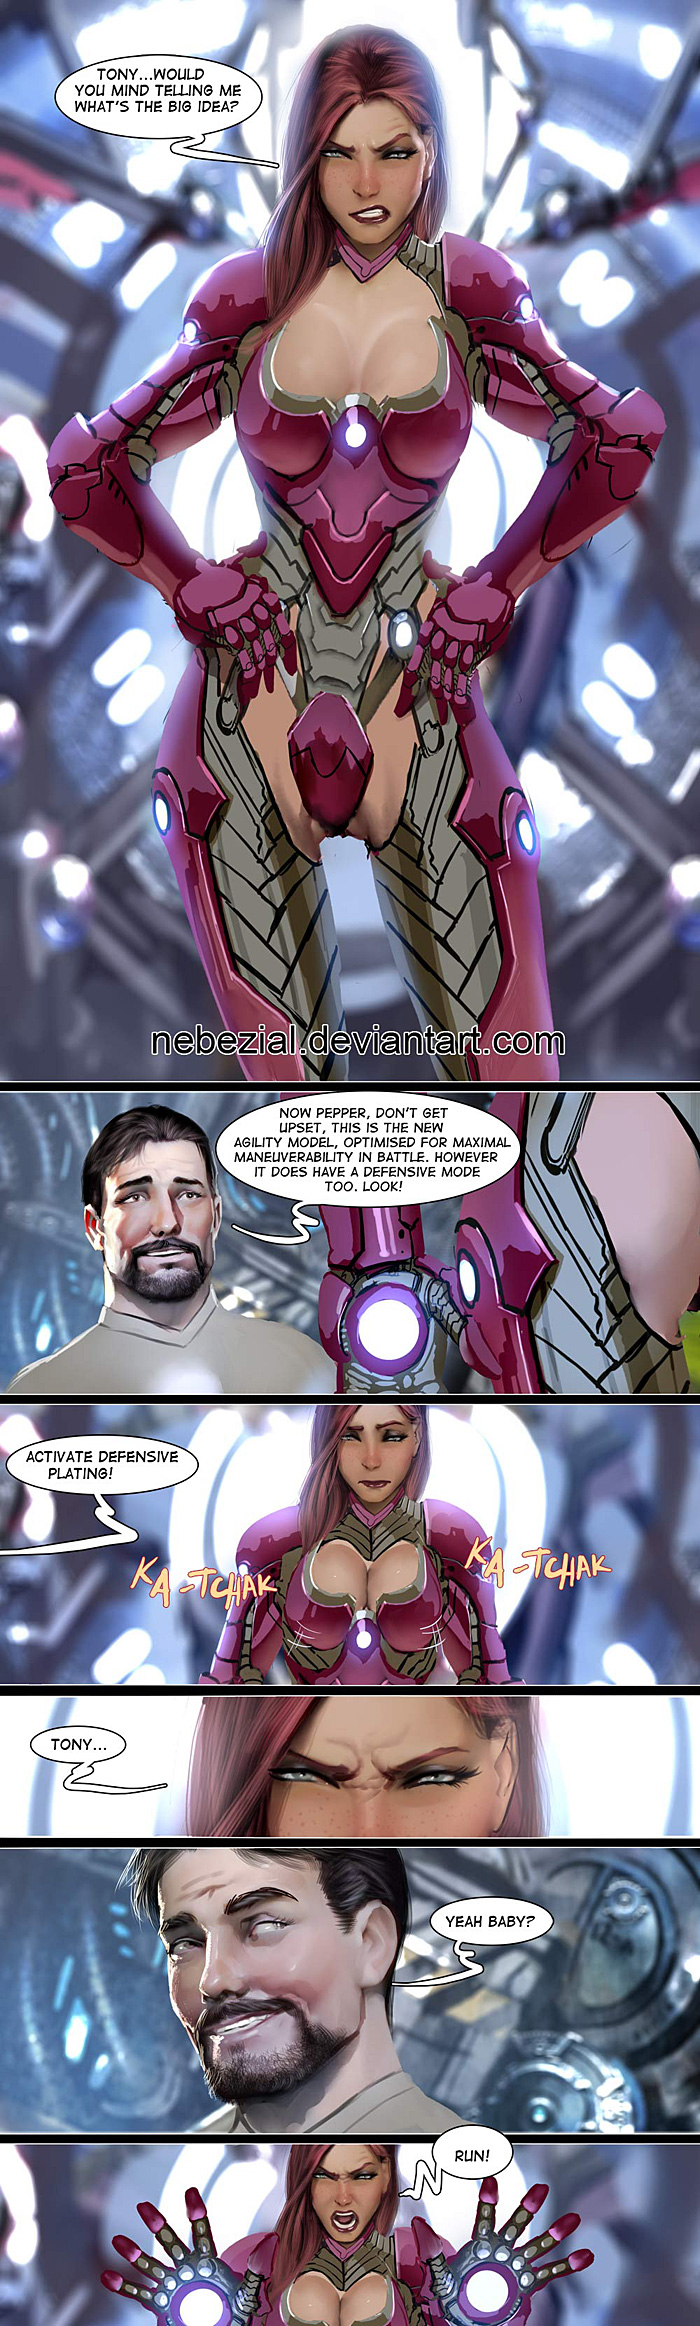 Tony Stark - Epic Douche Comic